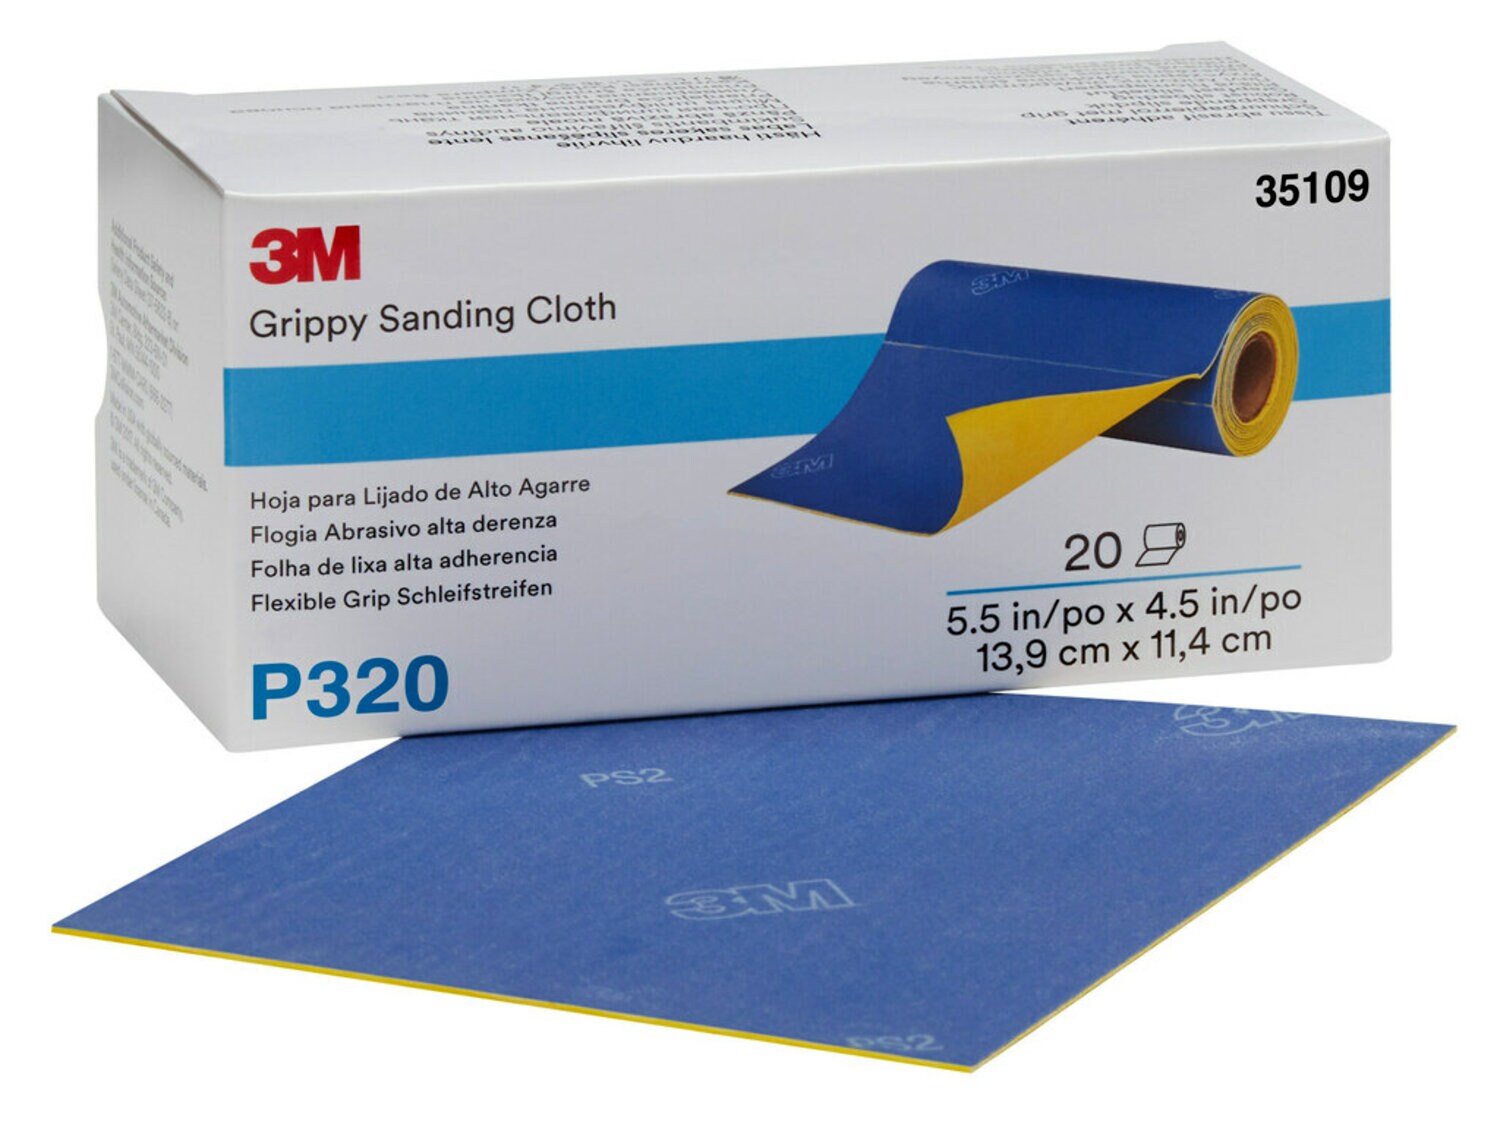 7100142931 - 3M Grippy Sanding Cloth 35109, P320 Grade, 5.5 in x 4.5 in, 20
Sheets/Roll, 4 Rolls/Case